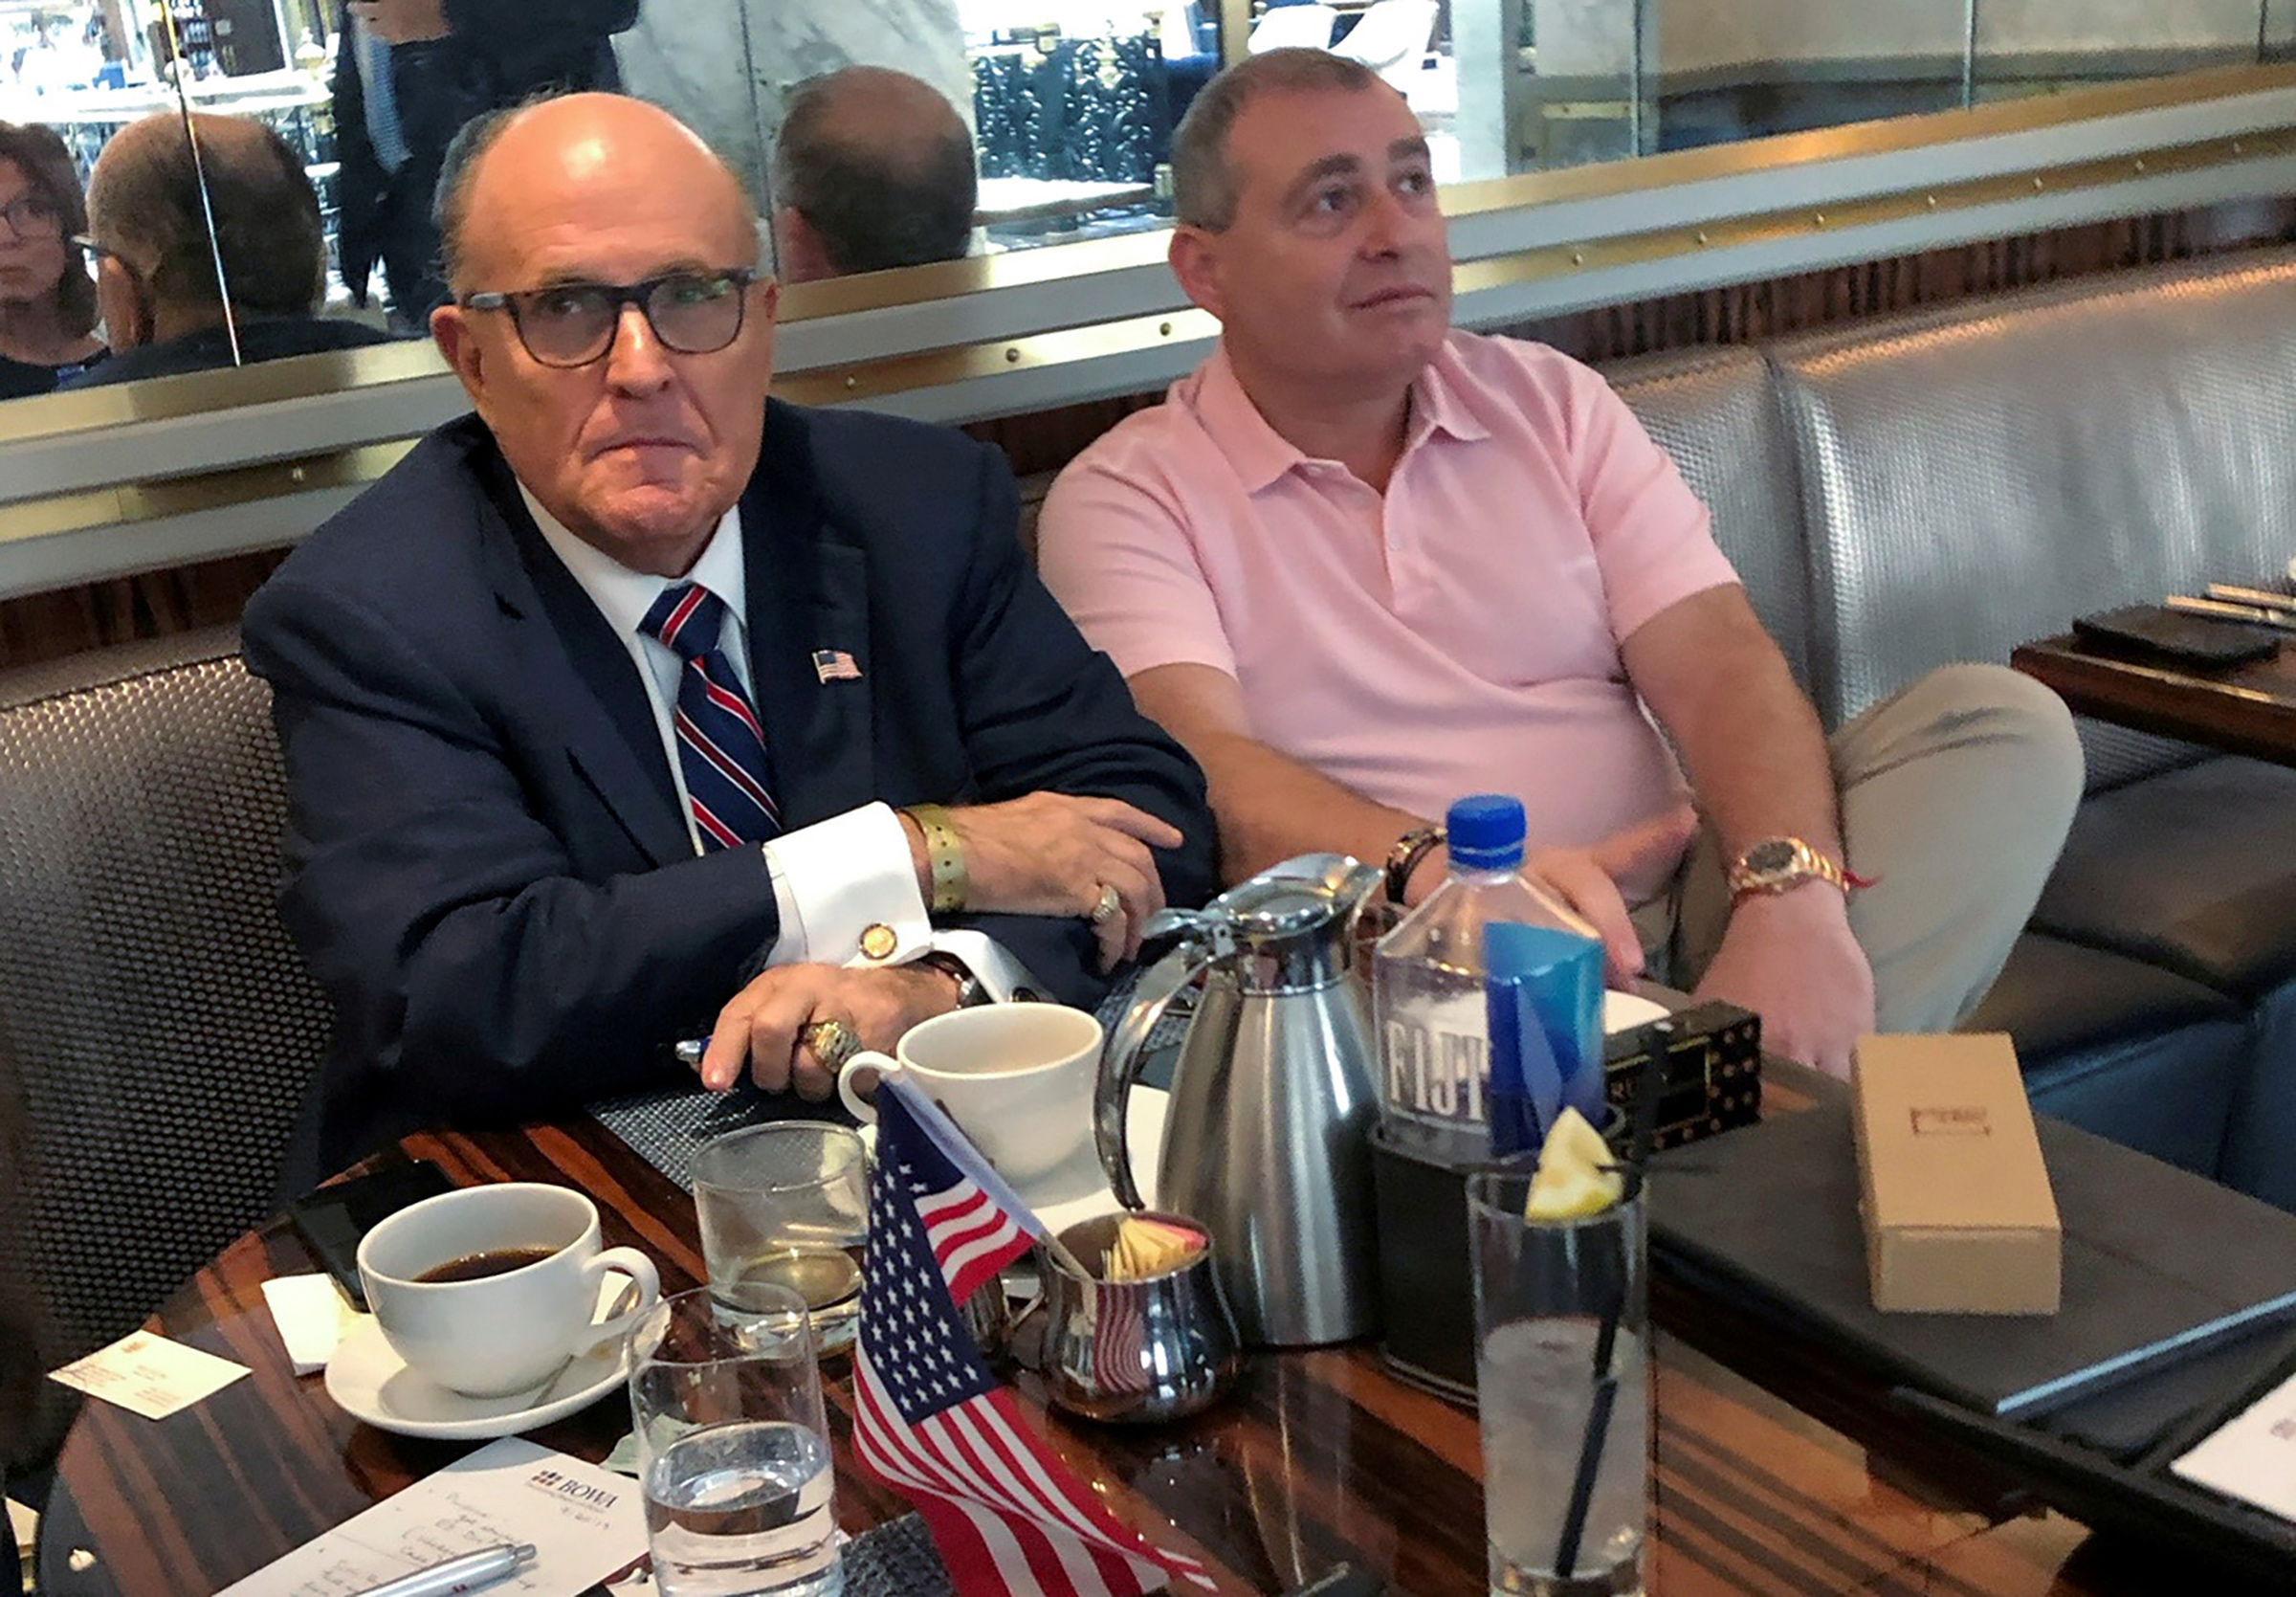 U.S. President Trump's personal lawyer Rudy Giuliani has coffee with Ukrainian-American businessman Lev Parnas at the Trump International Hotel in Washington, U.S., on Sept. 20, 2019. (Aram Roston—Reuters)